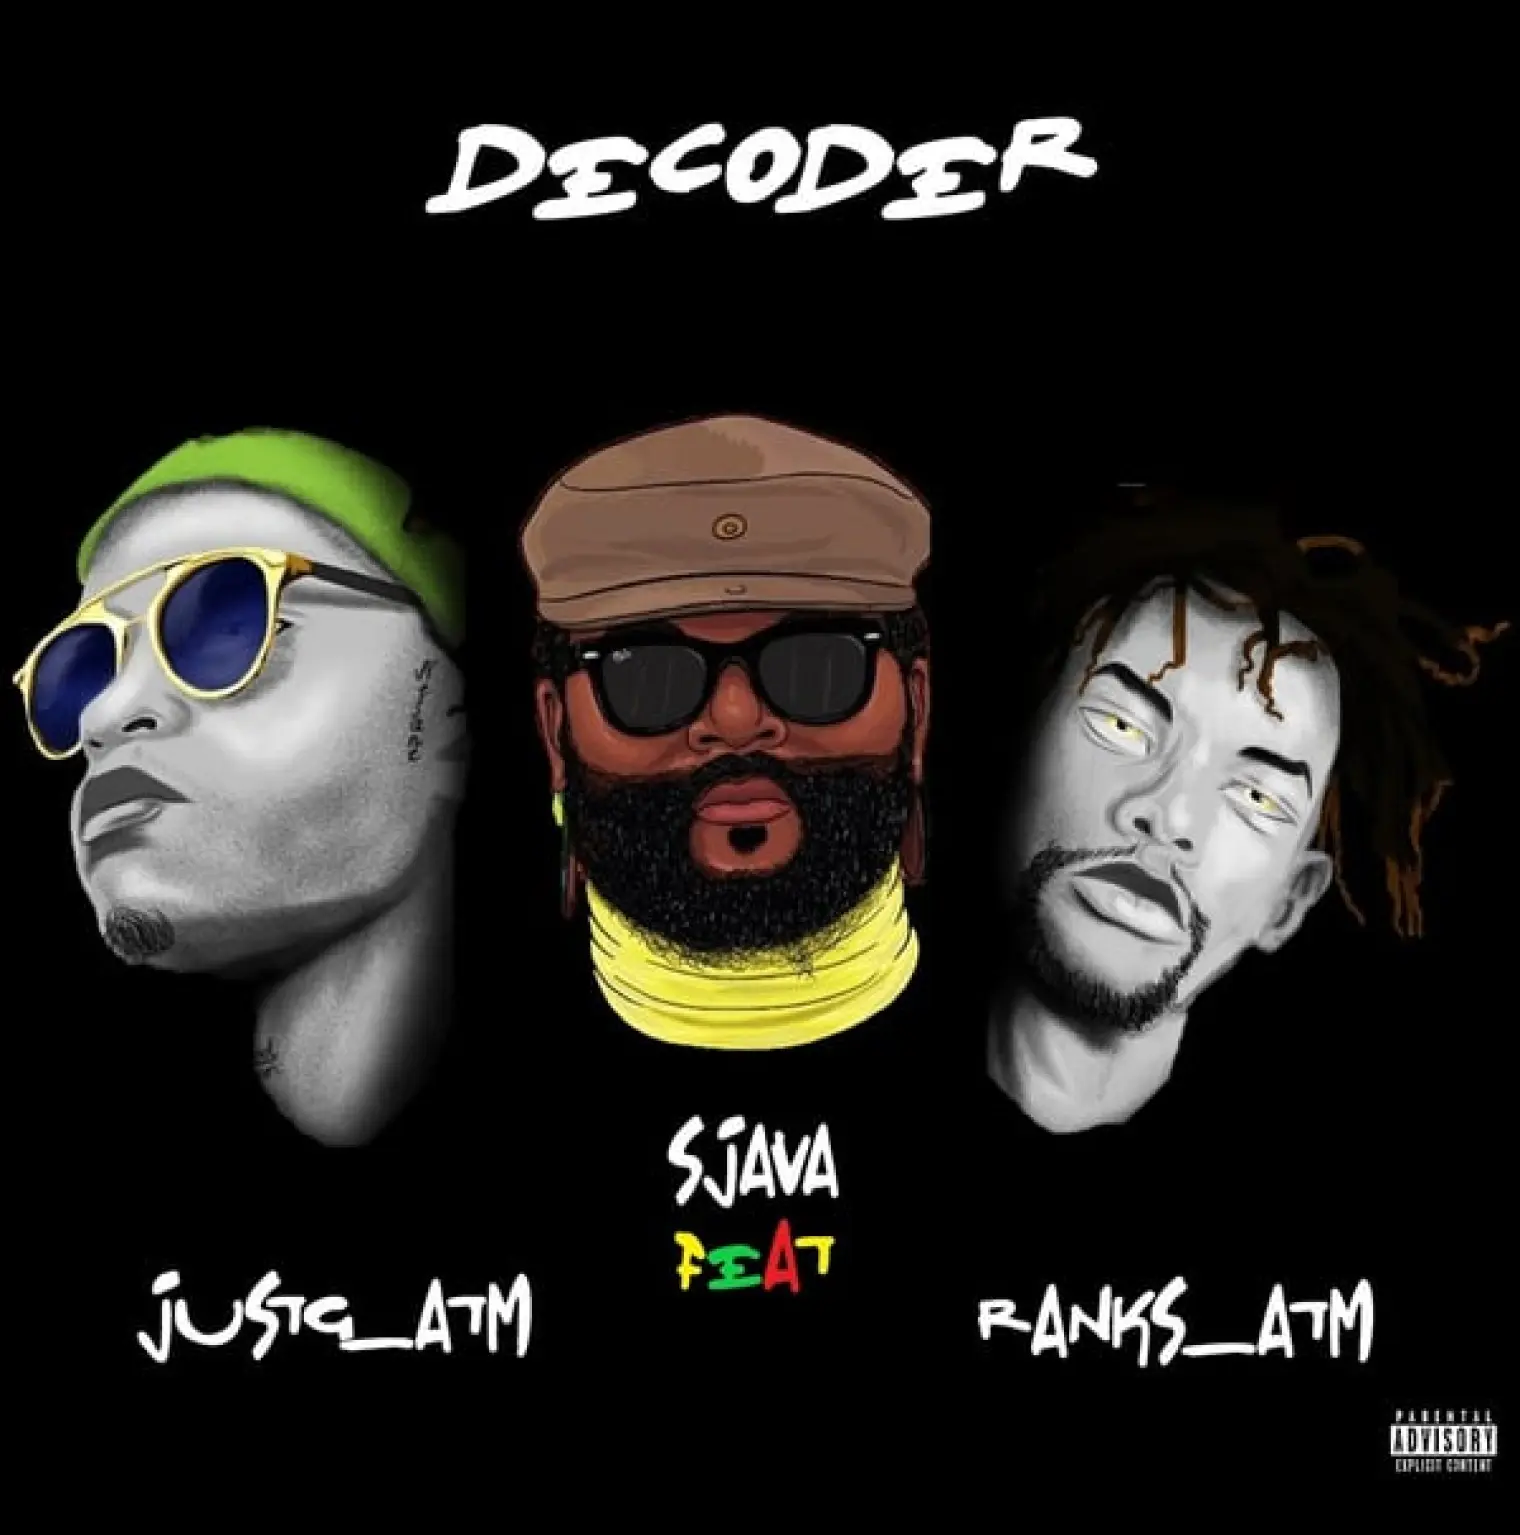 Decoder (feat. JustG_ATM & Ranks_ATM) -  Sjava 